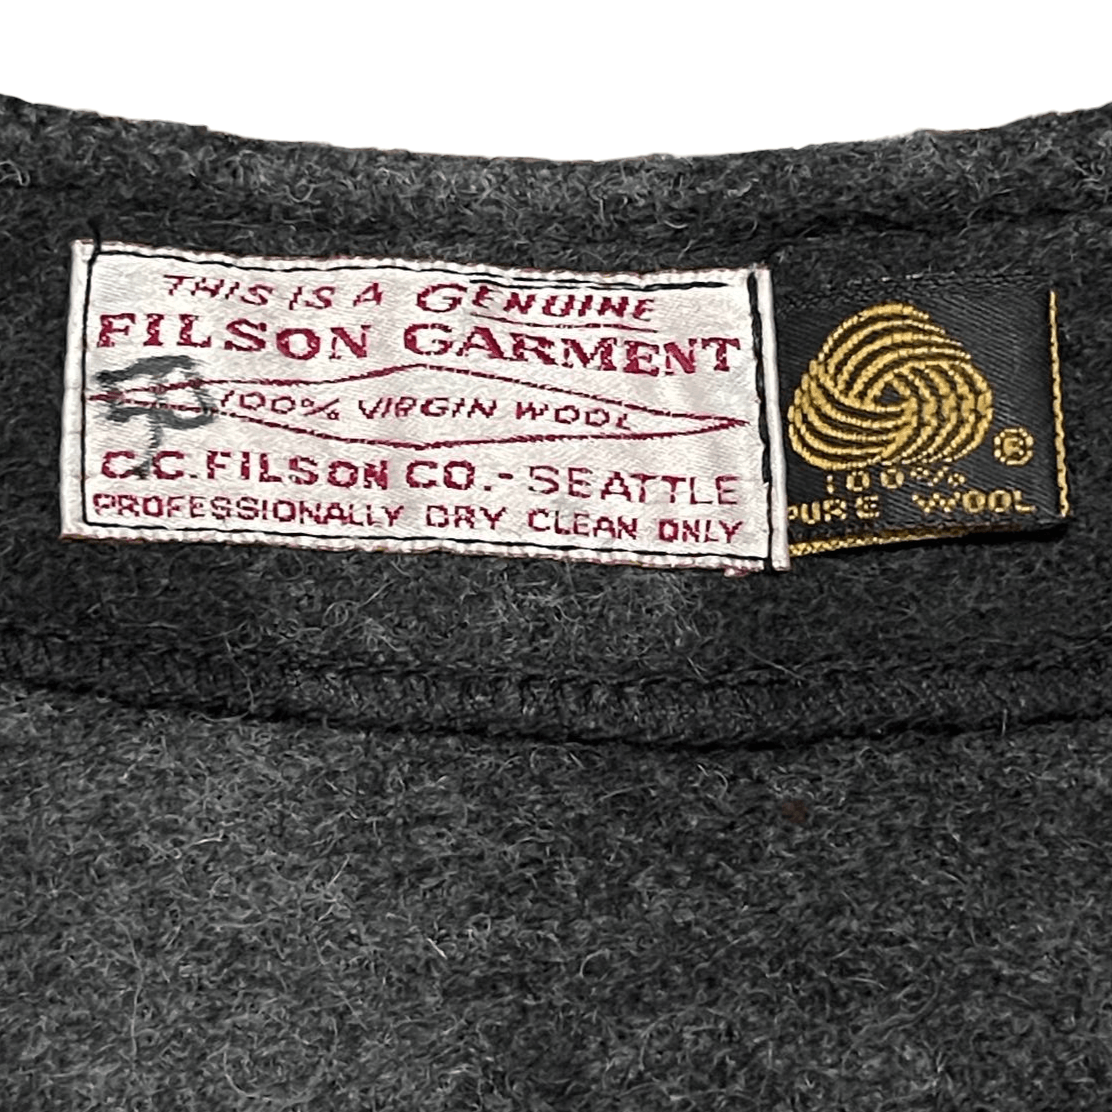 Filson Garment Mackinaw Wool Plaid Vest - 7